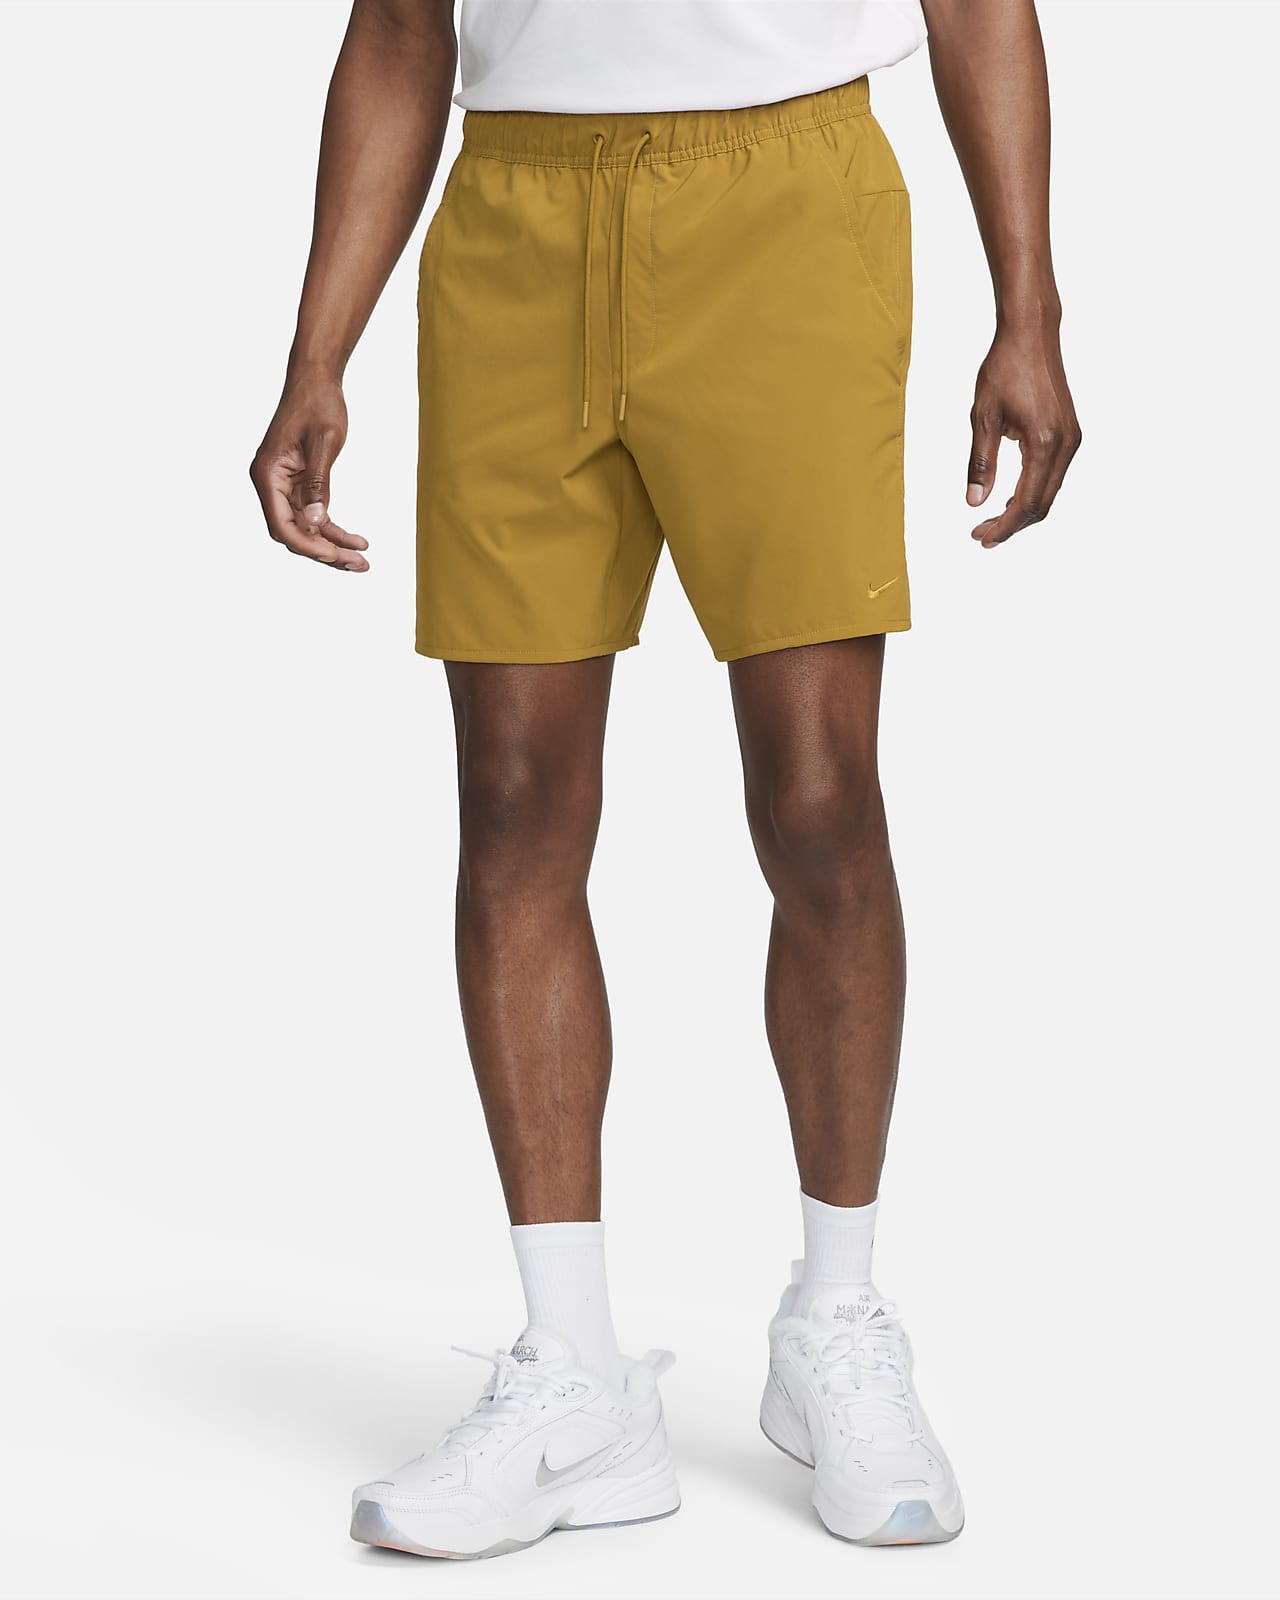 Nike Unlimited Pantalón corto Dri-FIT versátil de 18 cm sin forro